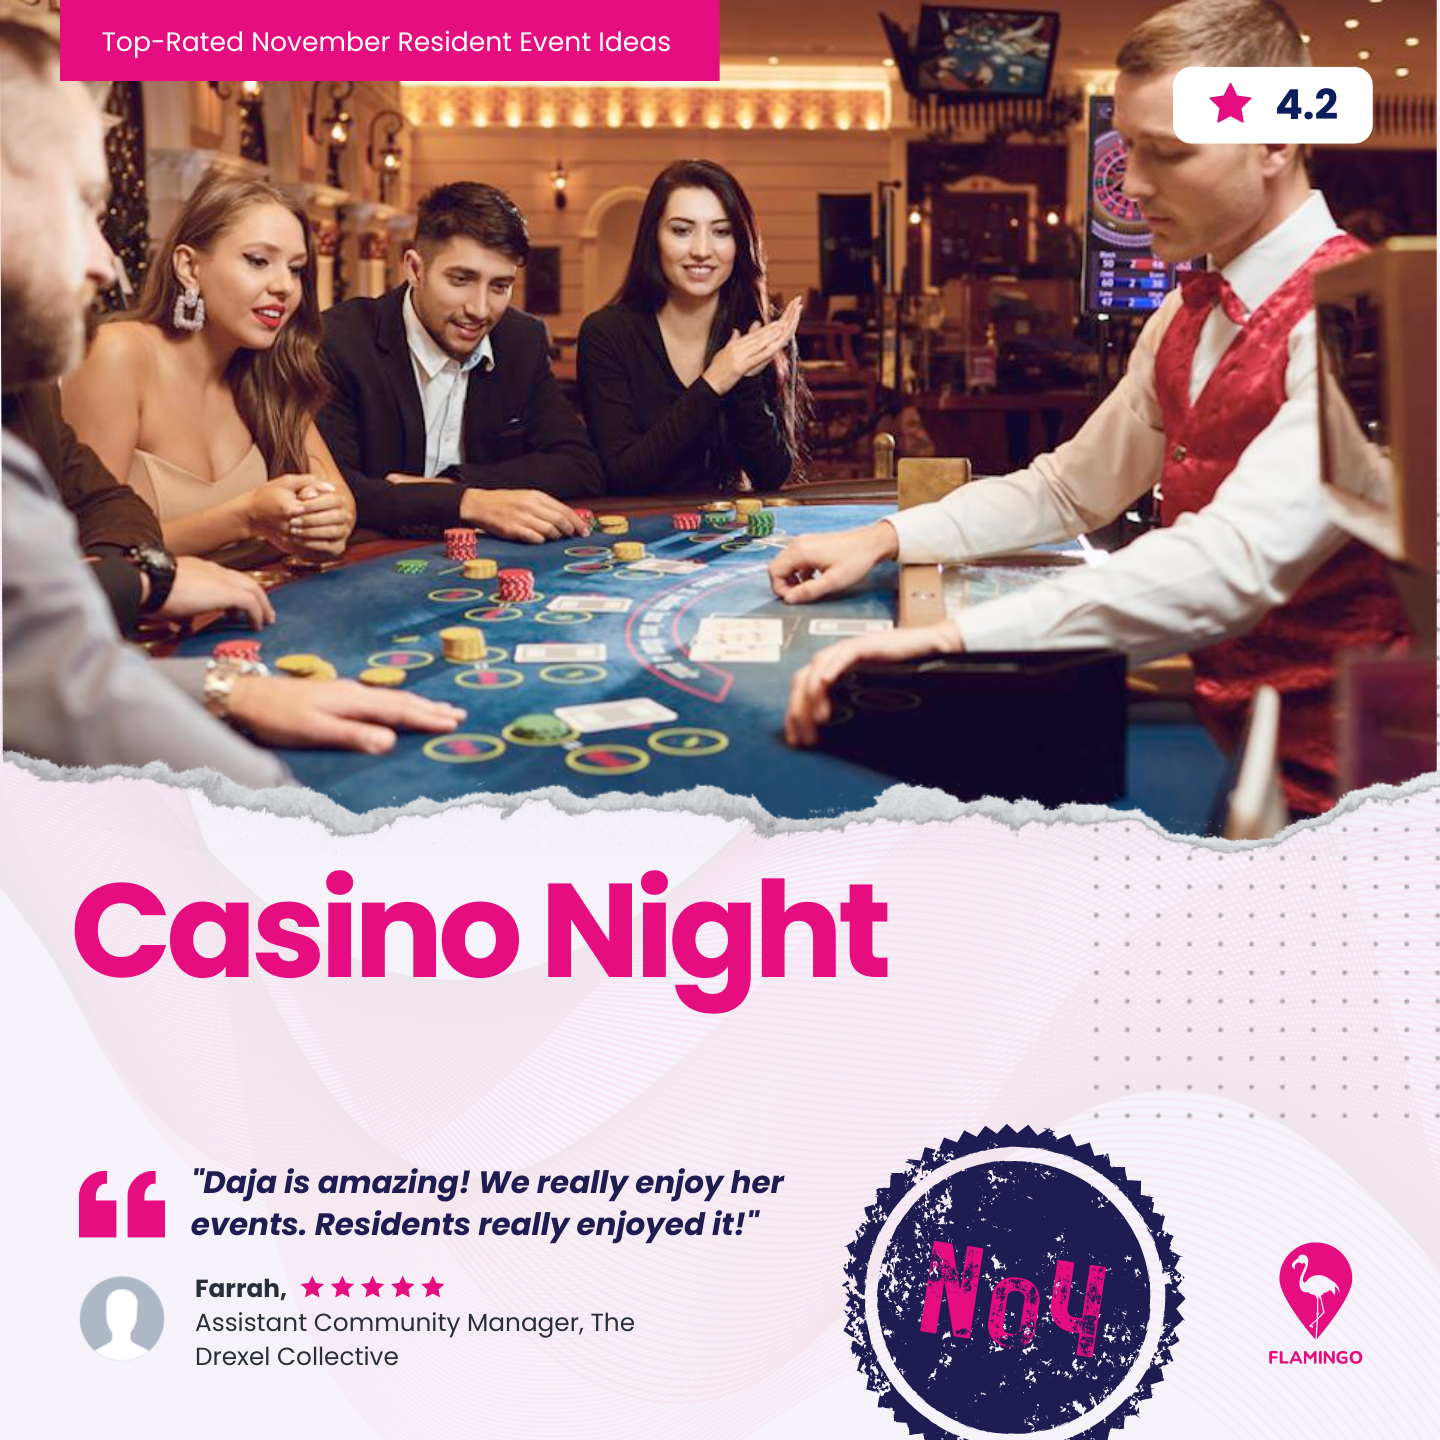 Casino Night | November Resident Event Ideas